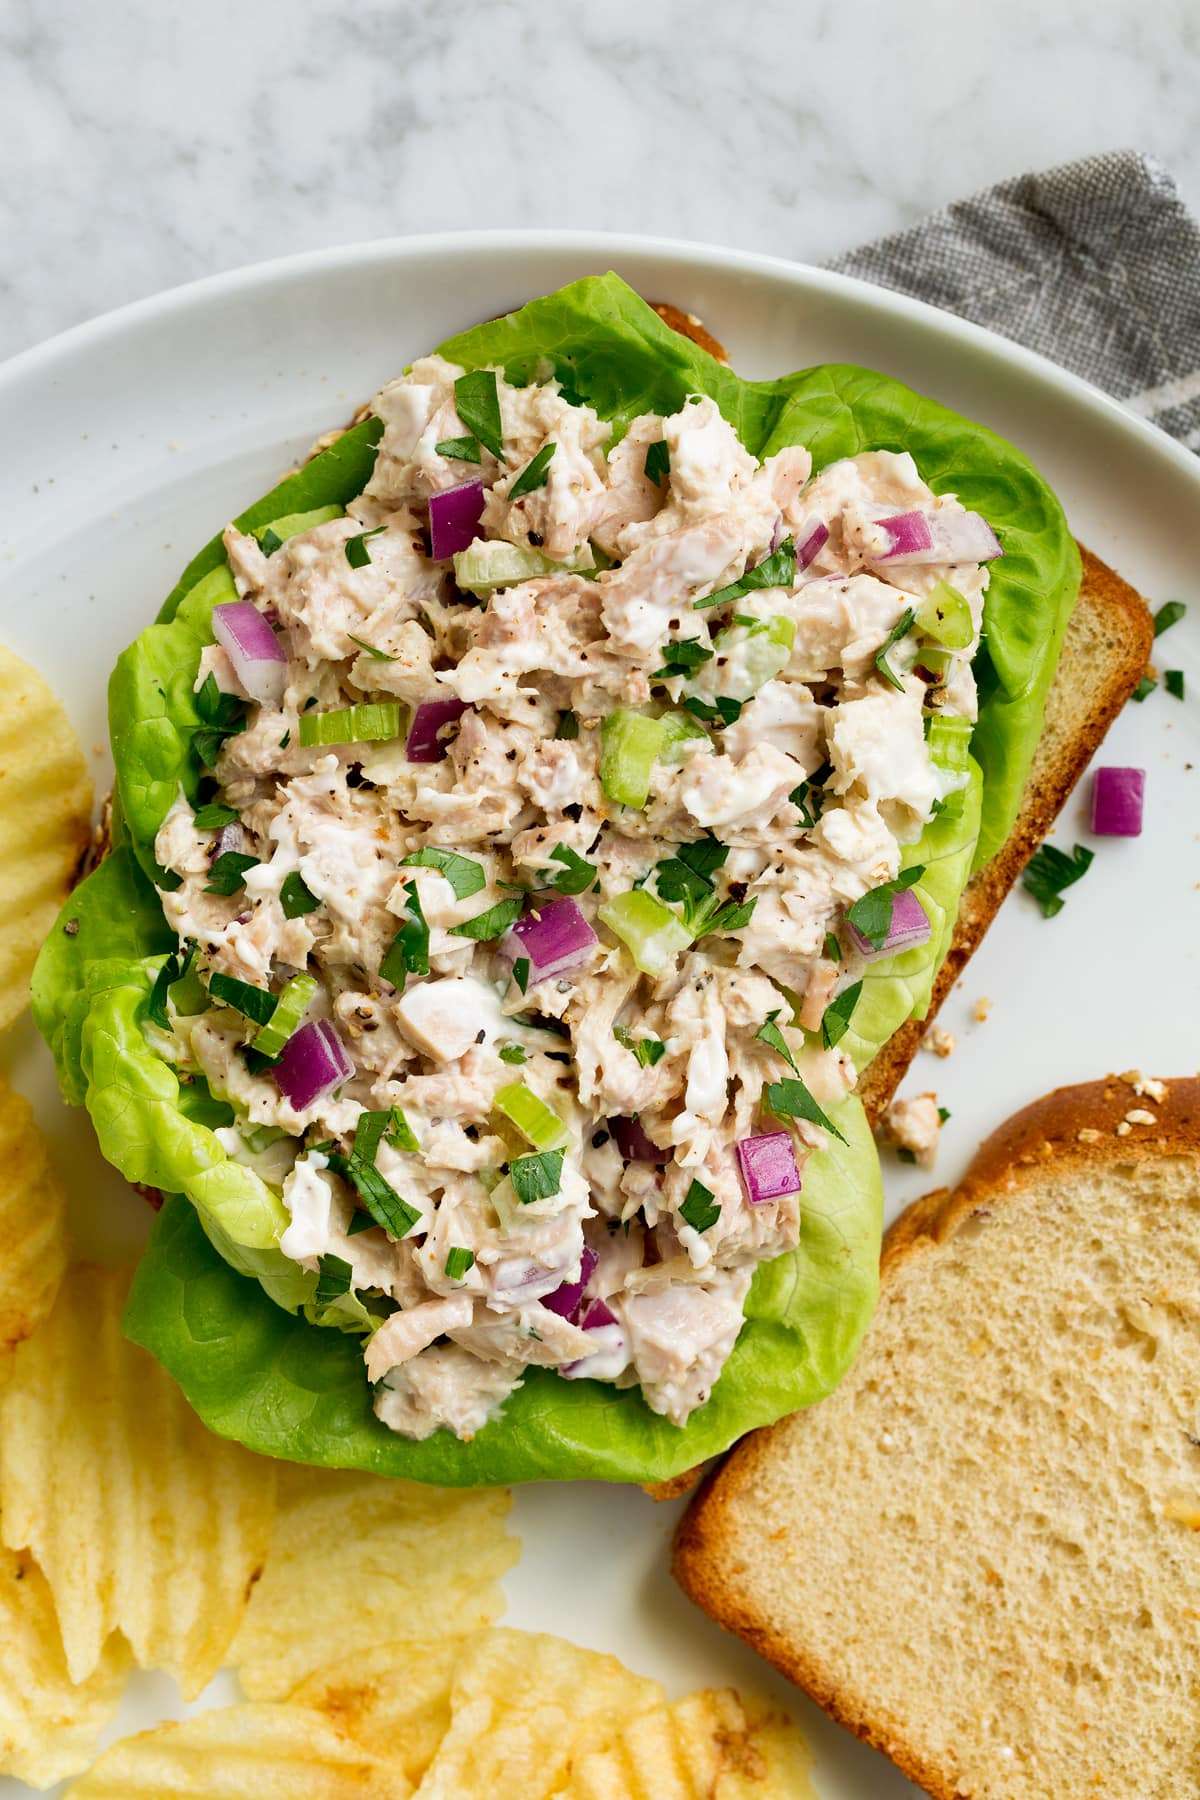 Best Tuna Salad Recipe